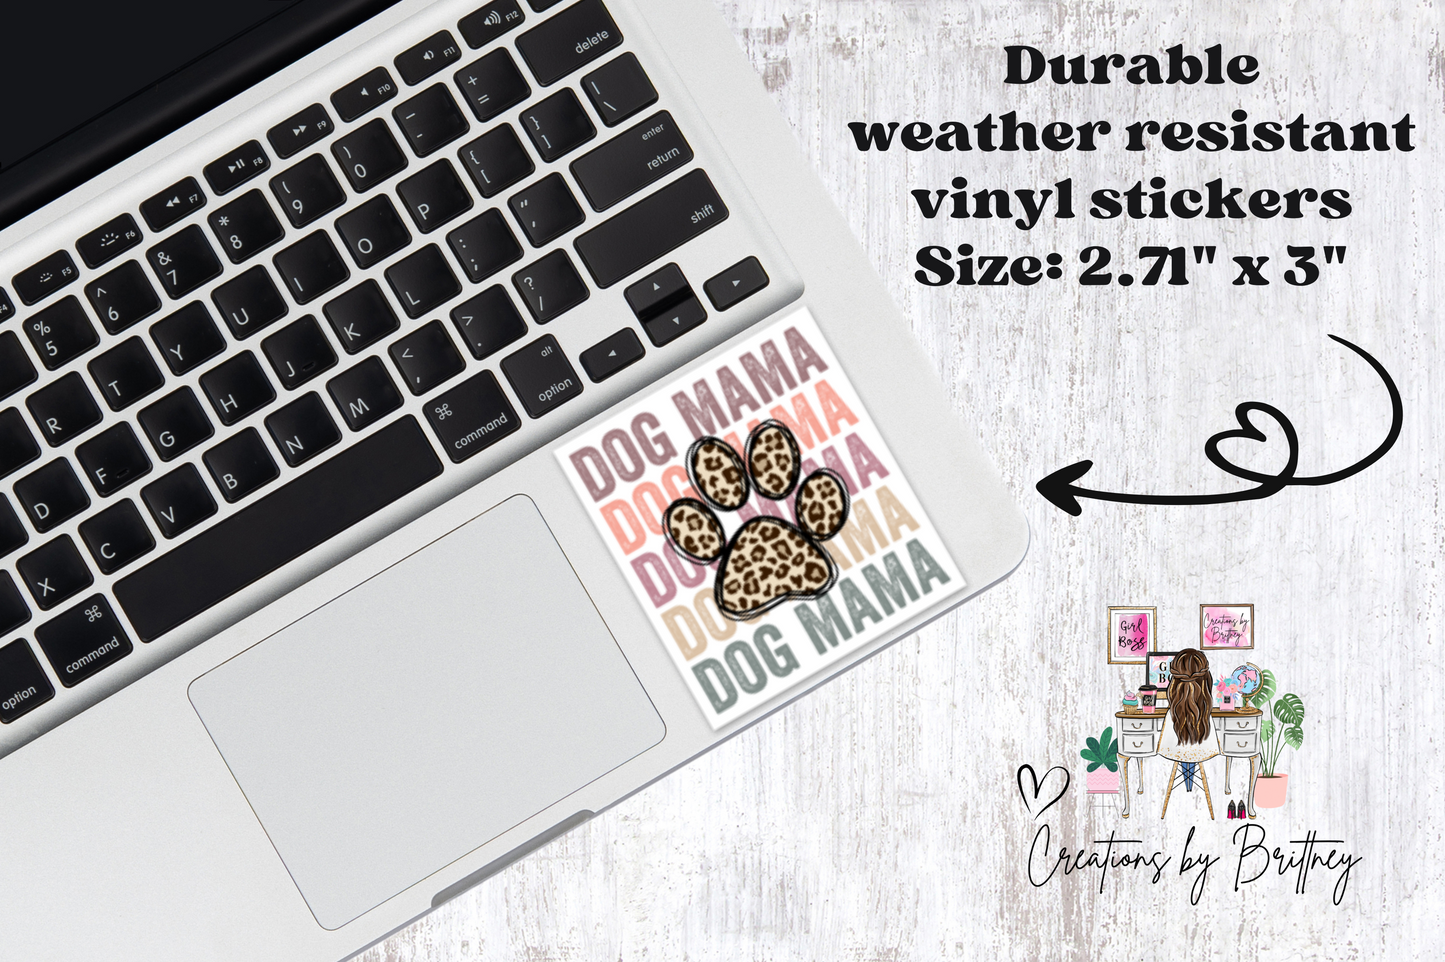 #72 Dog Mama Vinyl Sticker